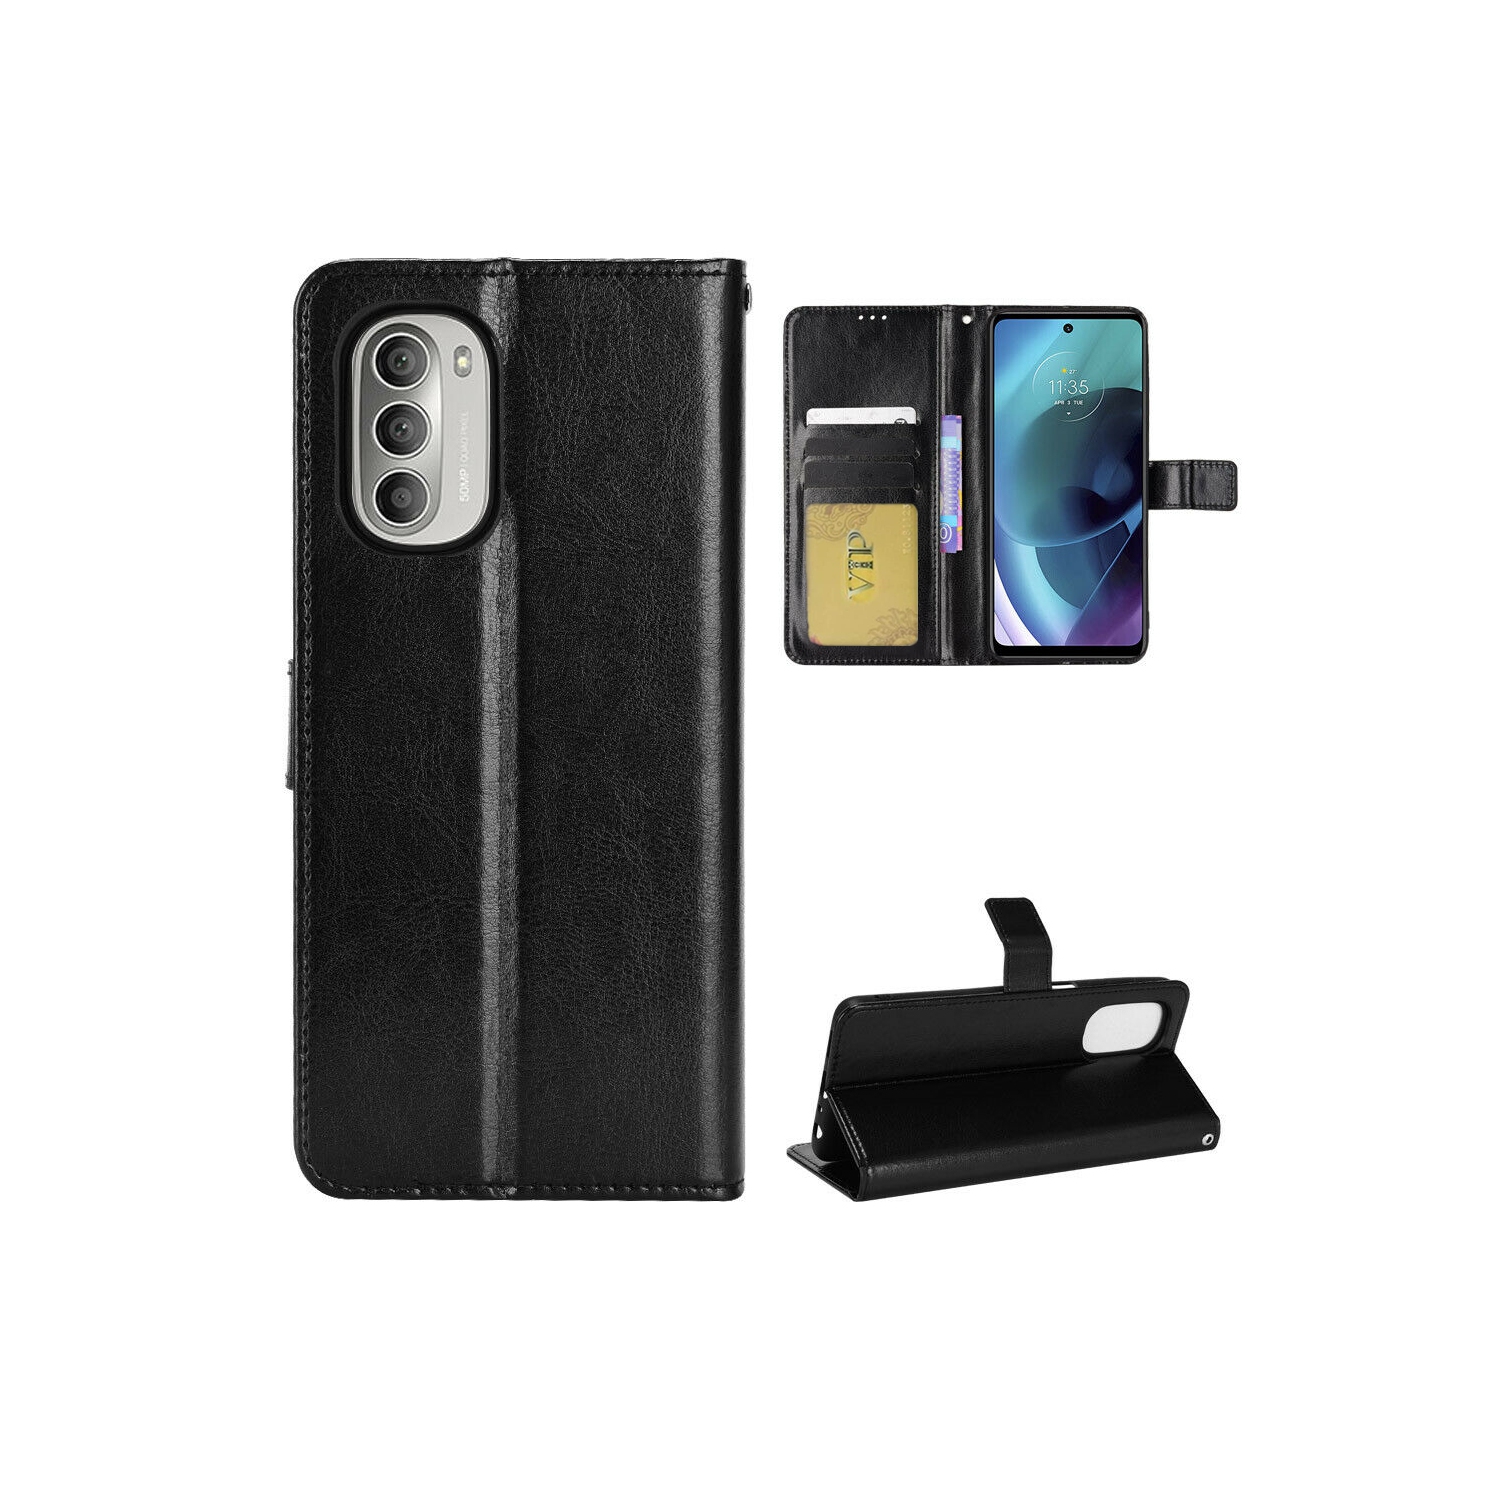 [CS] Motorola Moto G Stylus 5G 2022 Case, Magnetic Leather Folio Wallet Flip Case Cover with Card Slot, Black